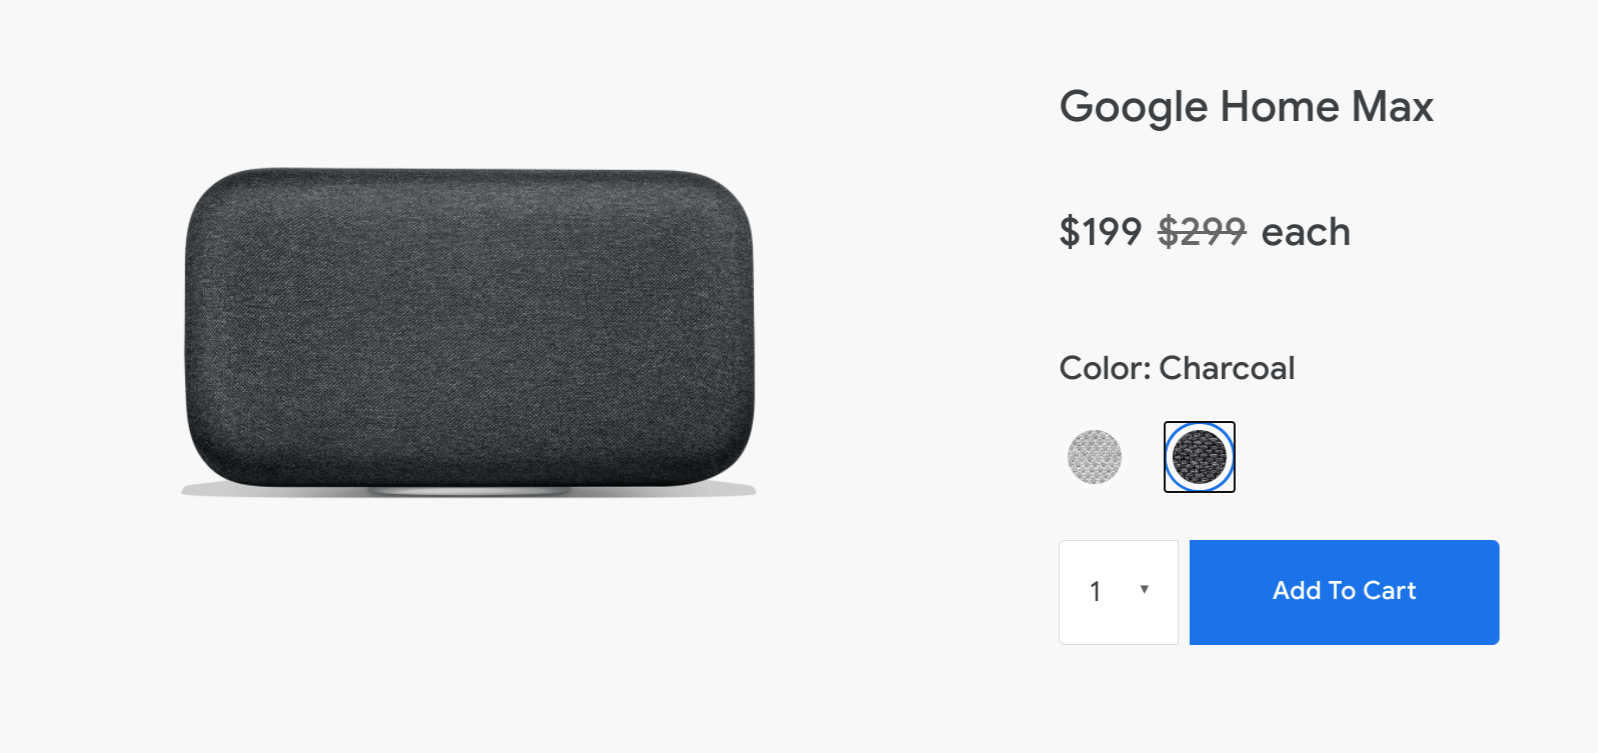 Google discounts Home Max to $199 ahead 